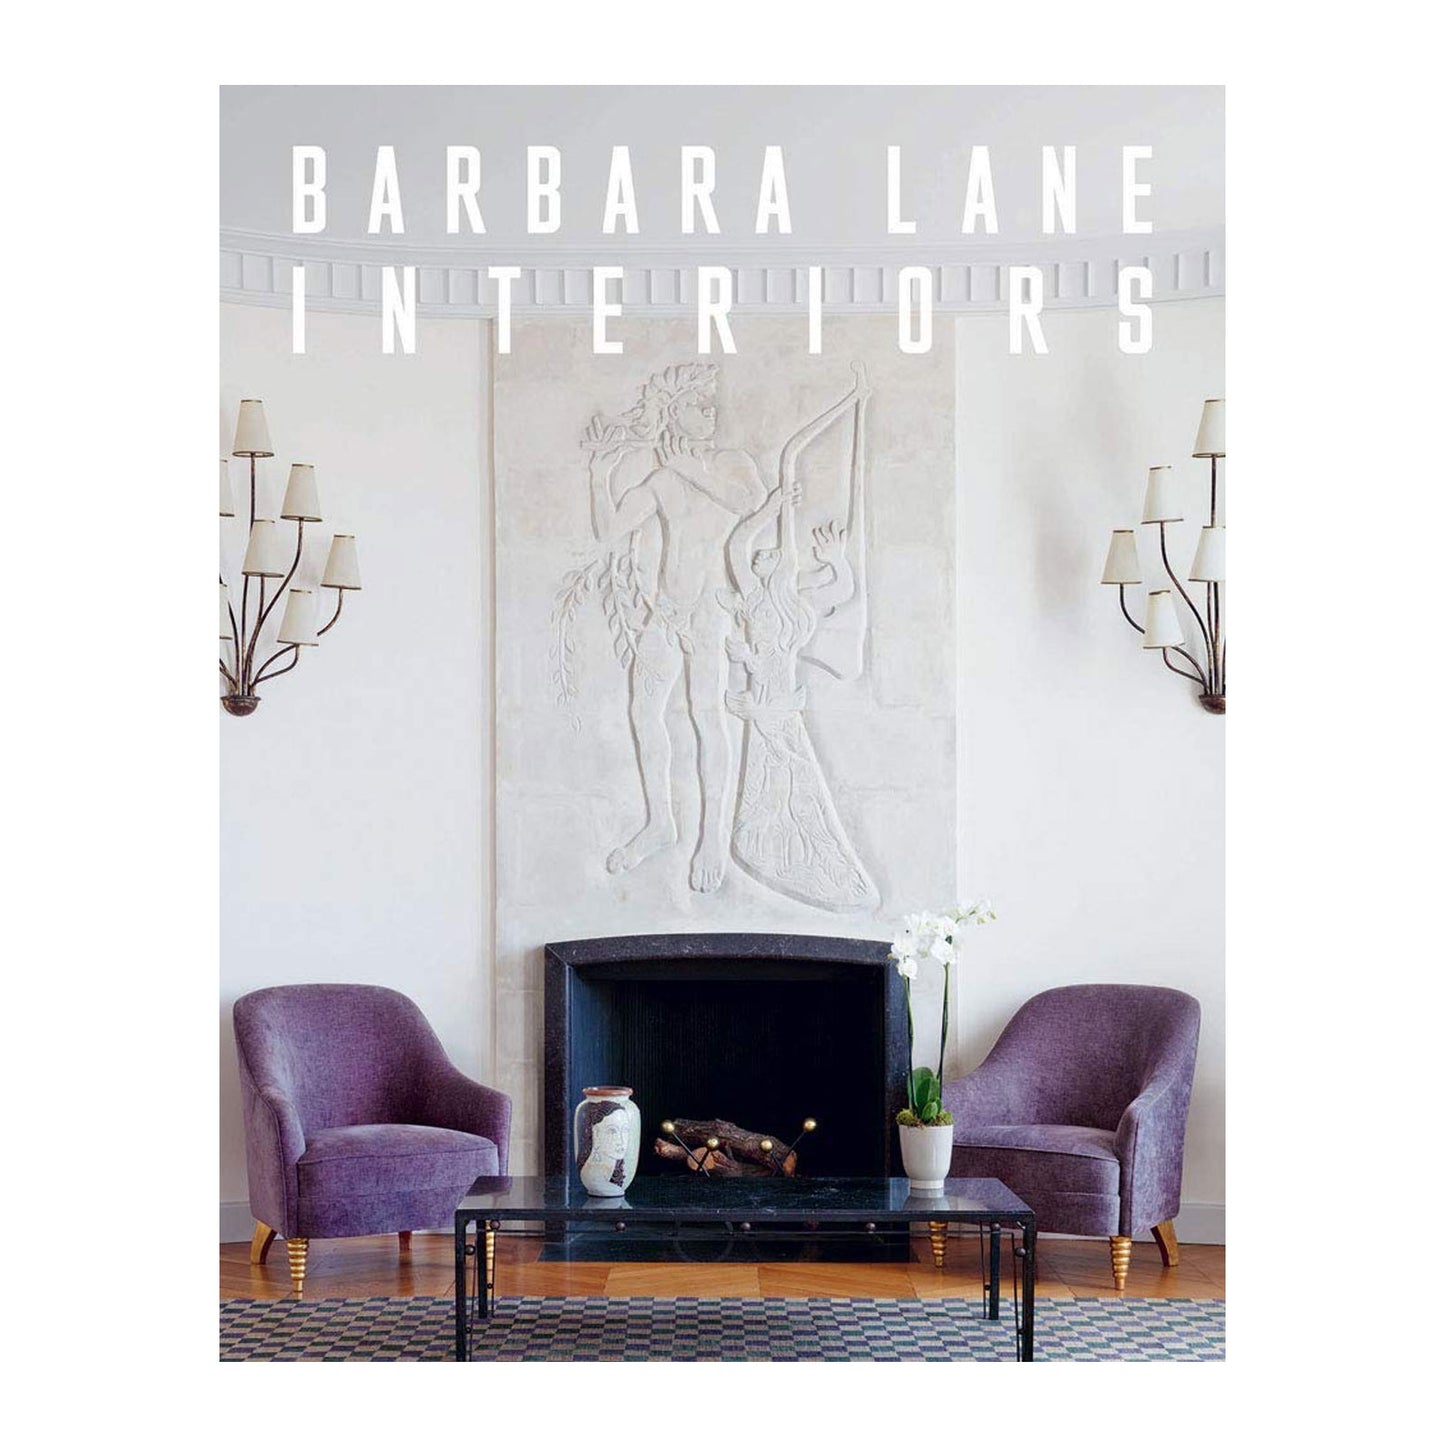 Barbara Lane Interiors